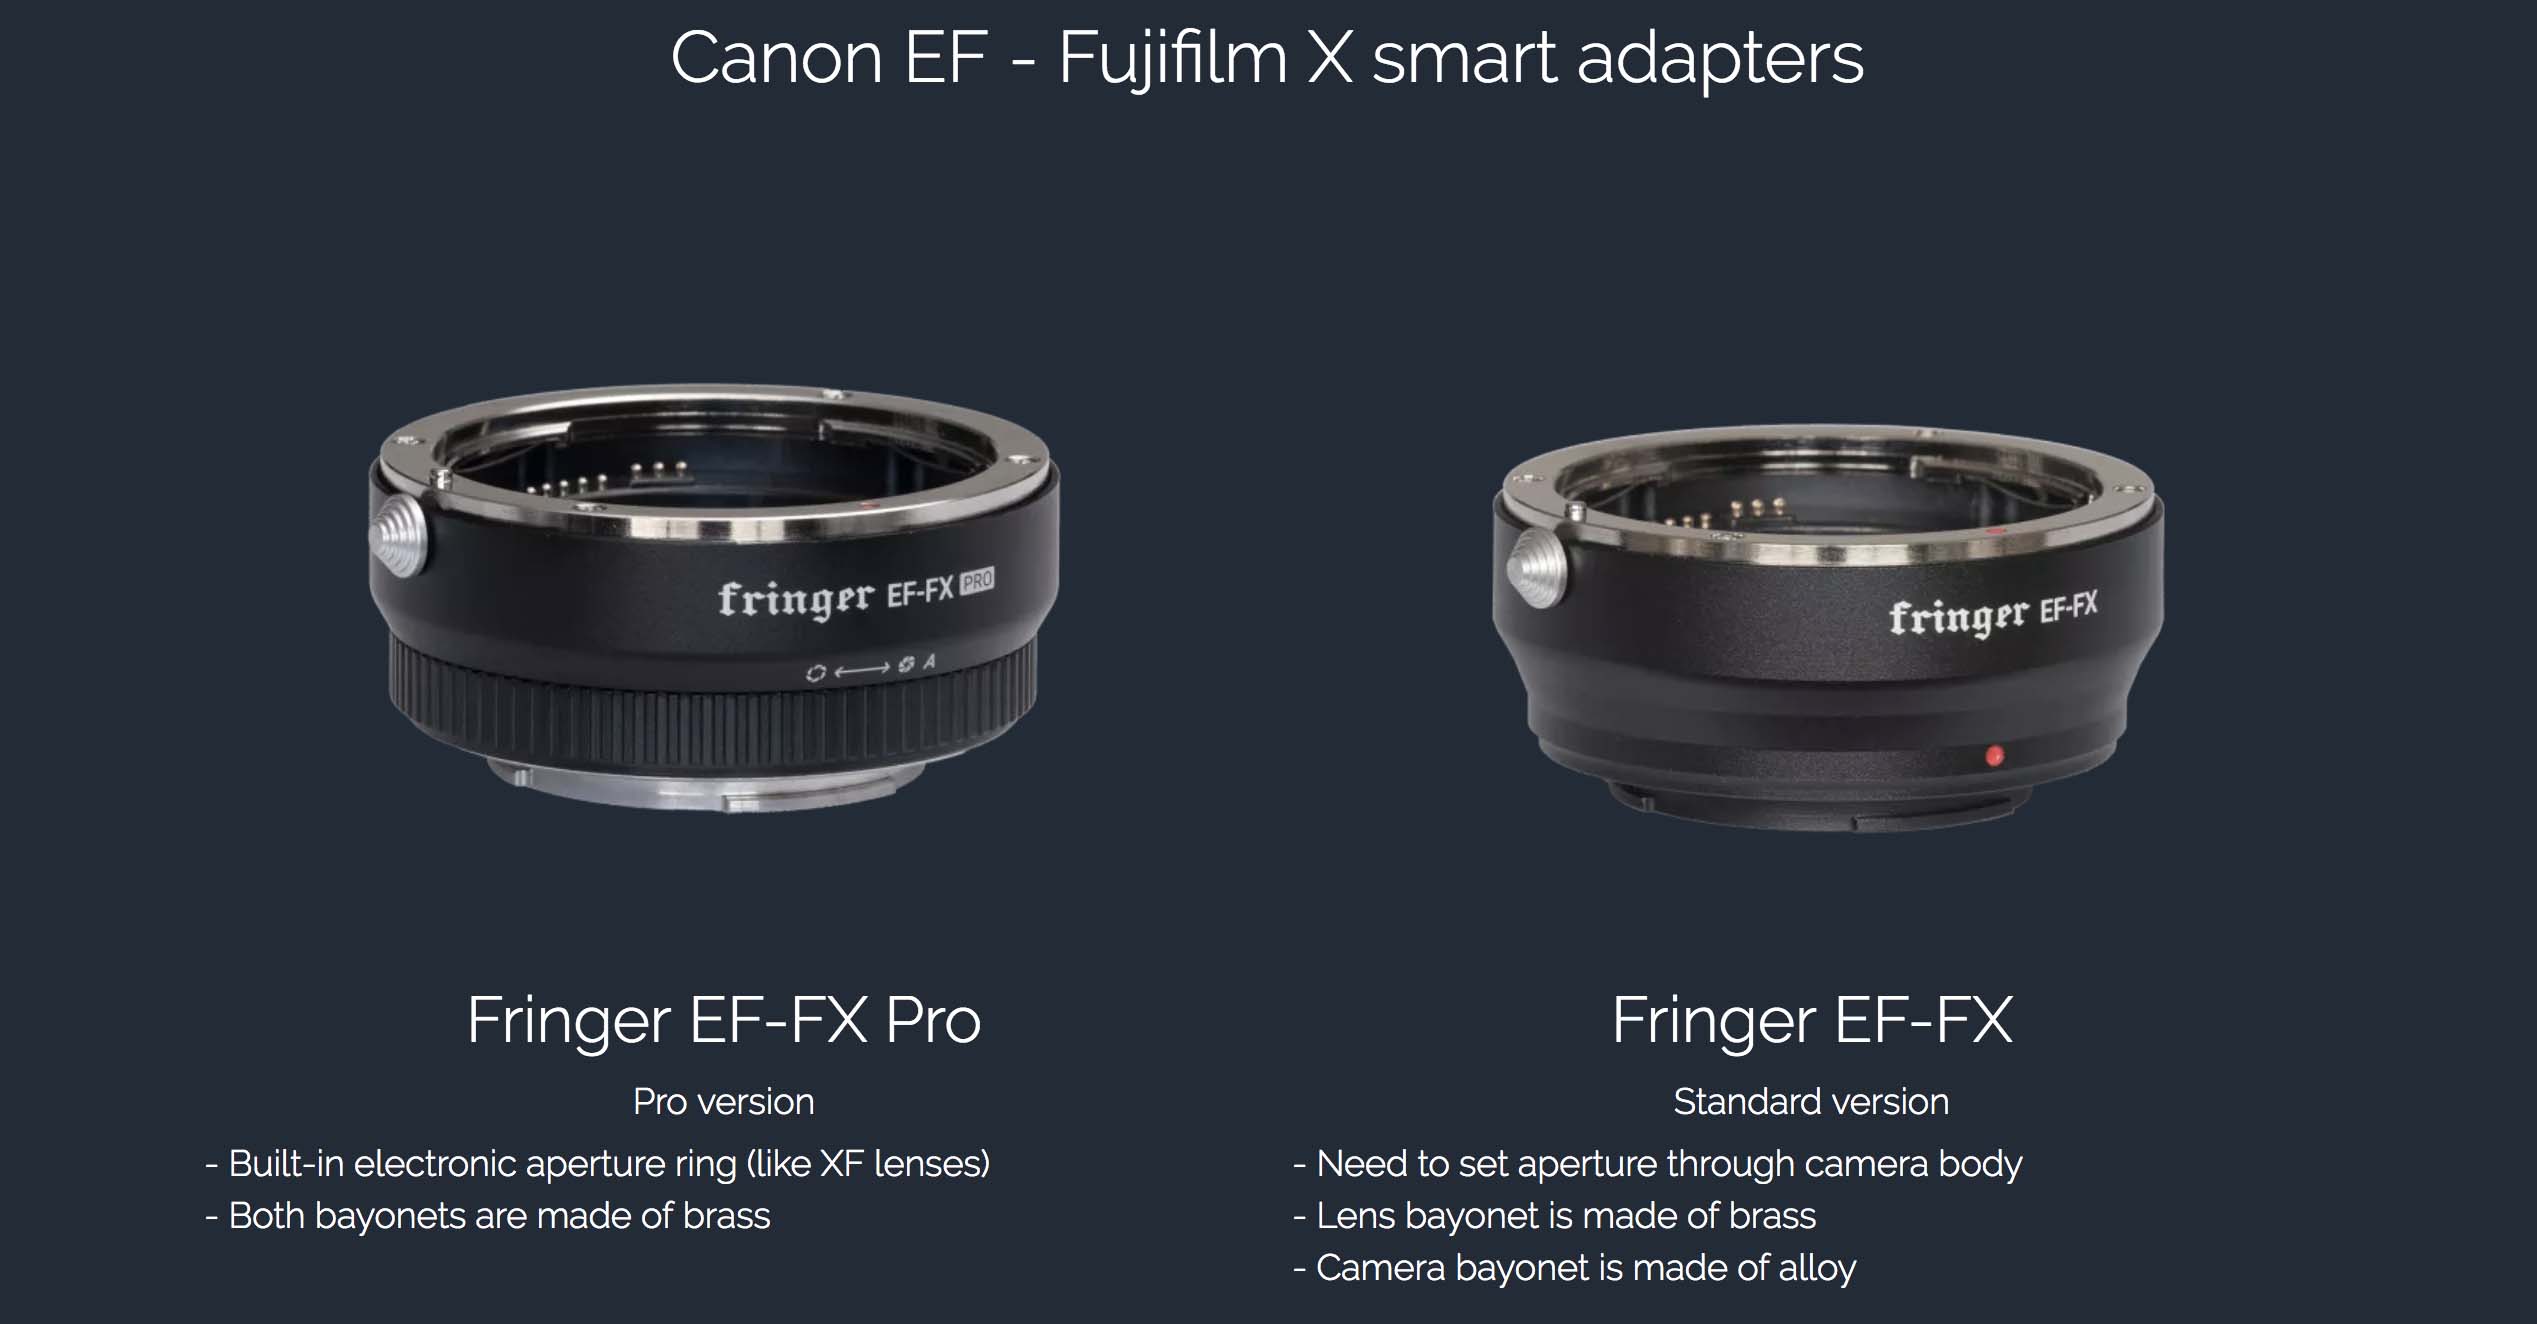 Fringer EF-FX Pro and EF-FX Announced - Fuji Addict